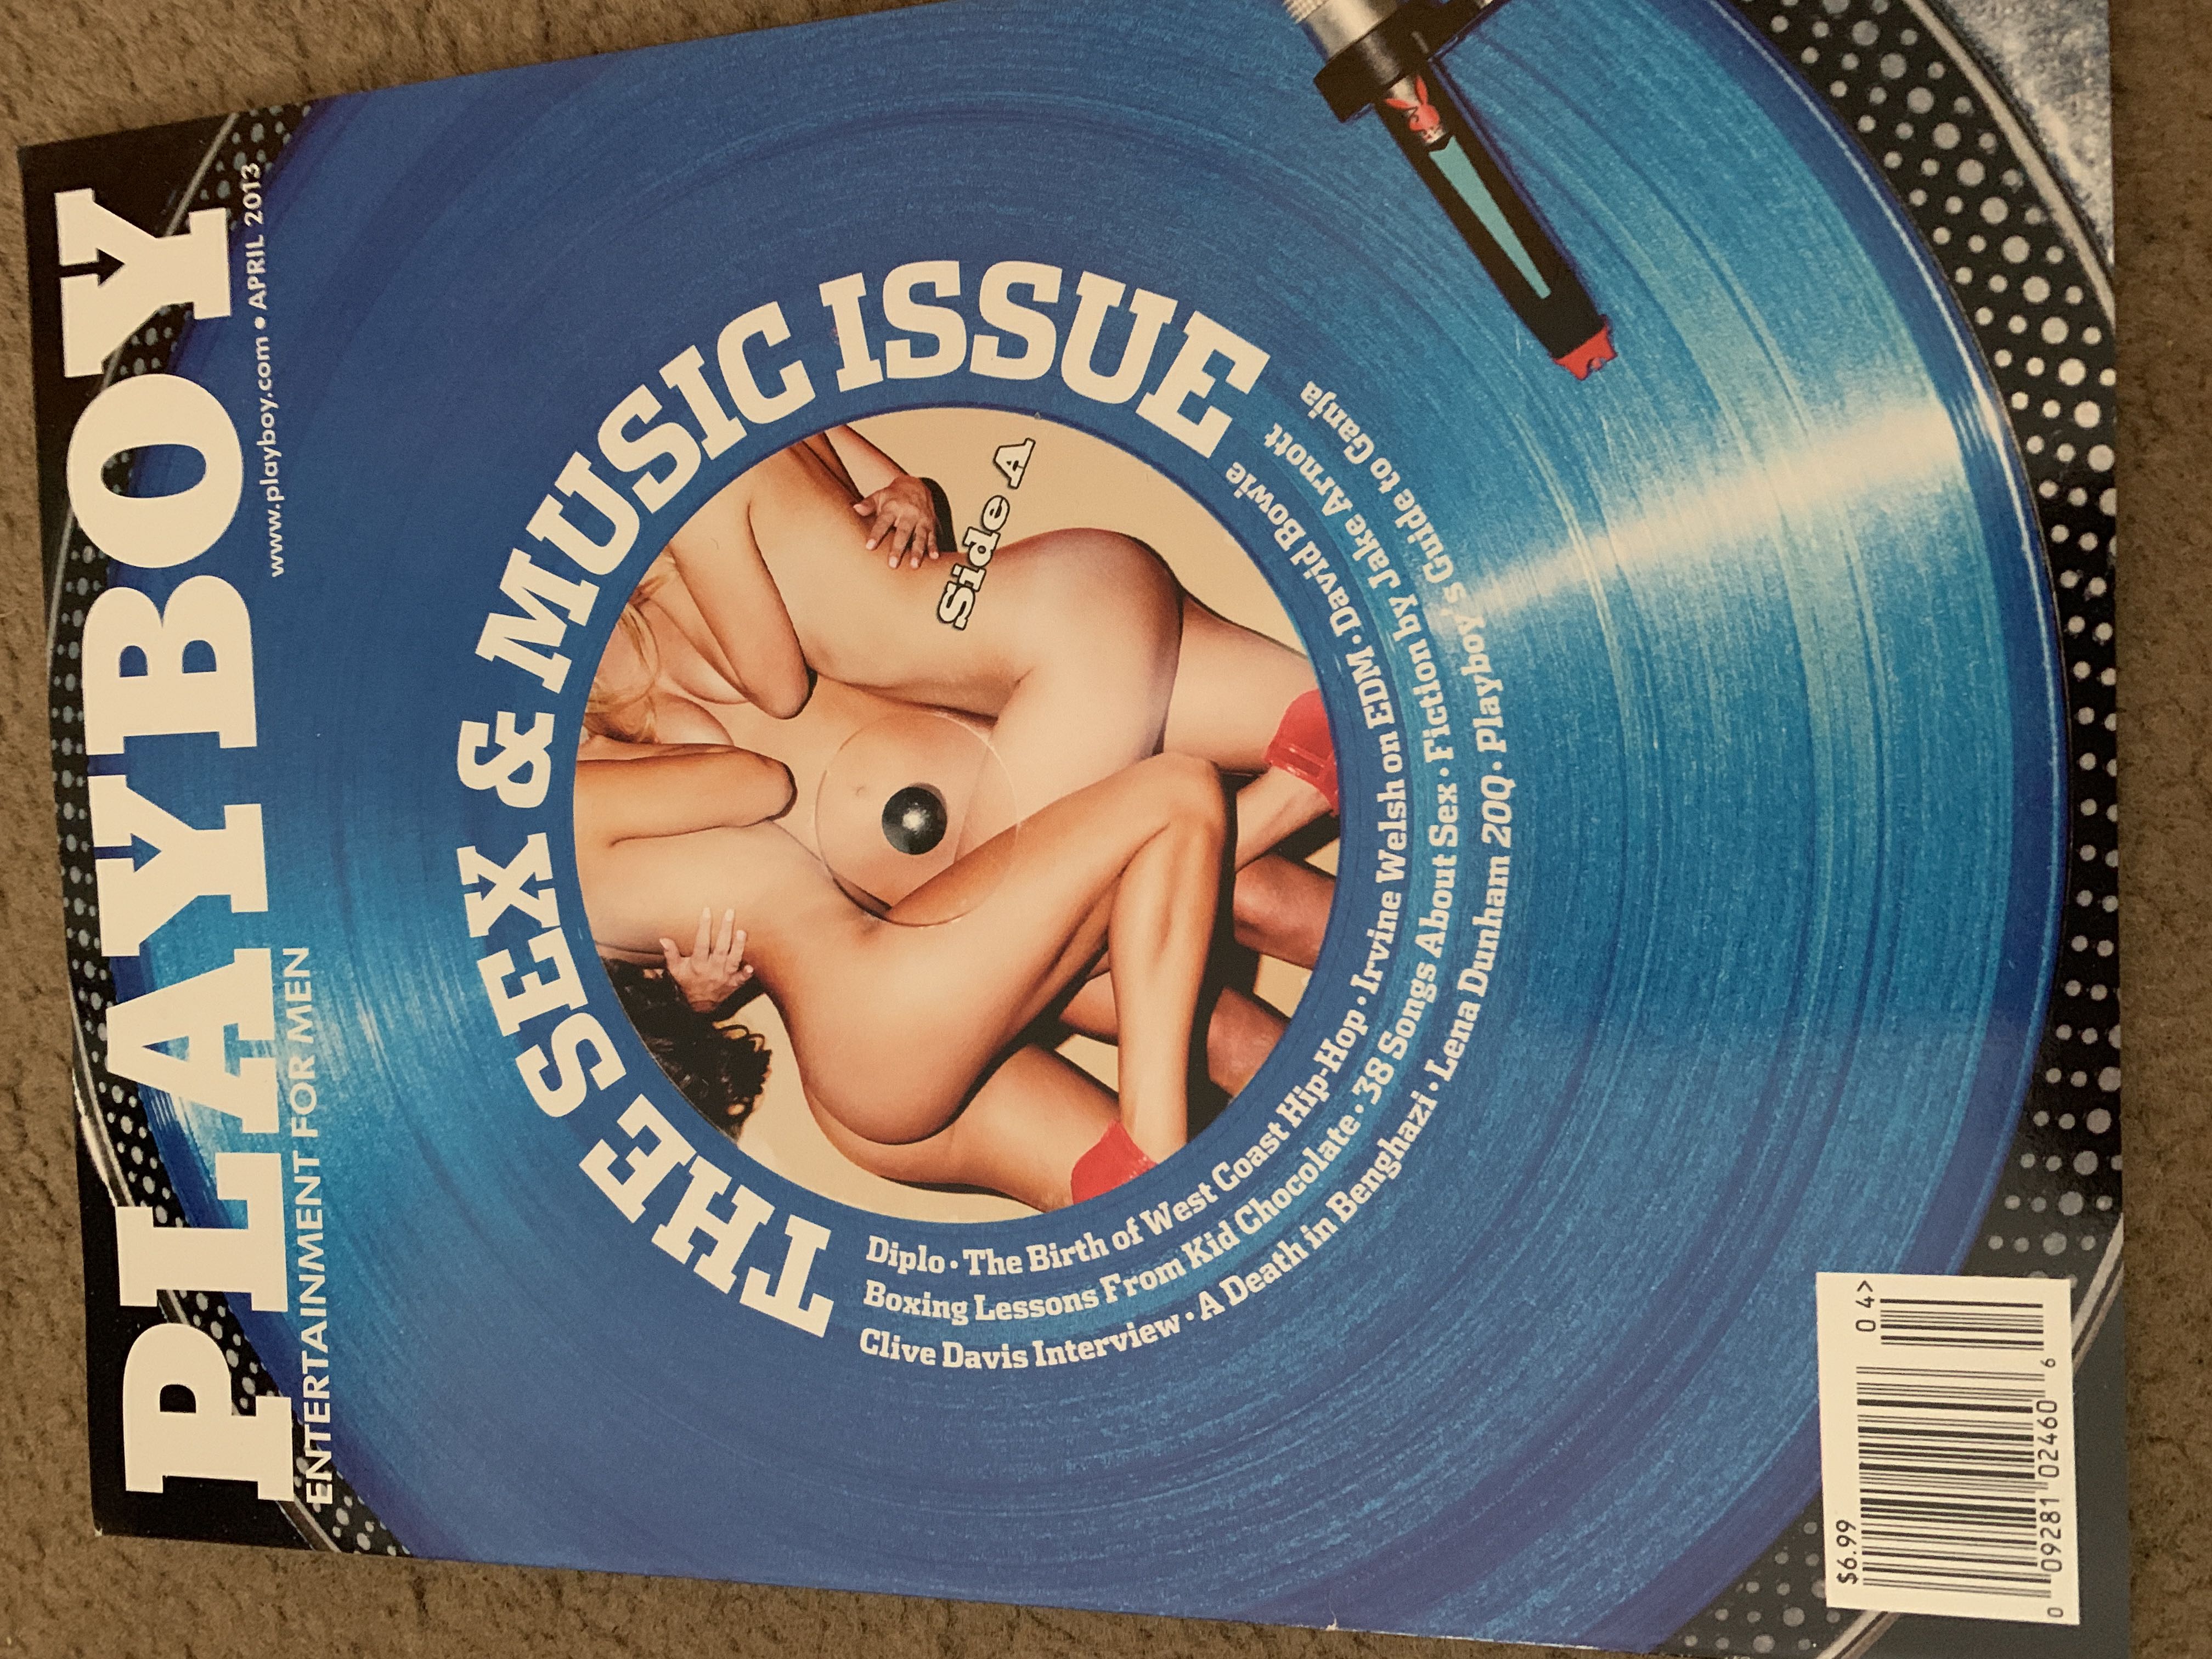 Playboy  (April) magazine collectible [Barcode 009281024606] - Main Image 1